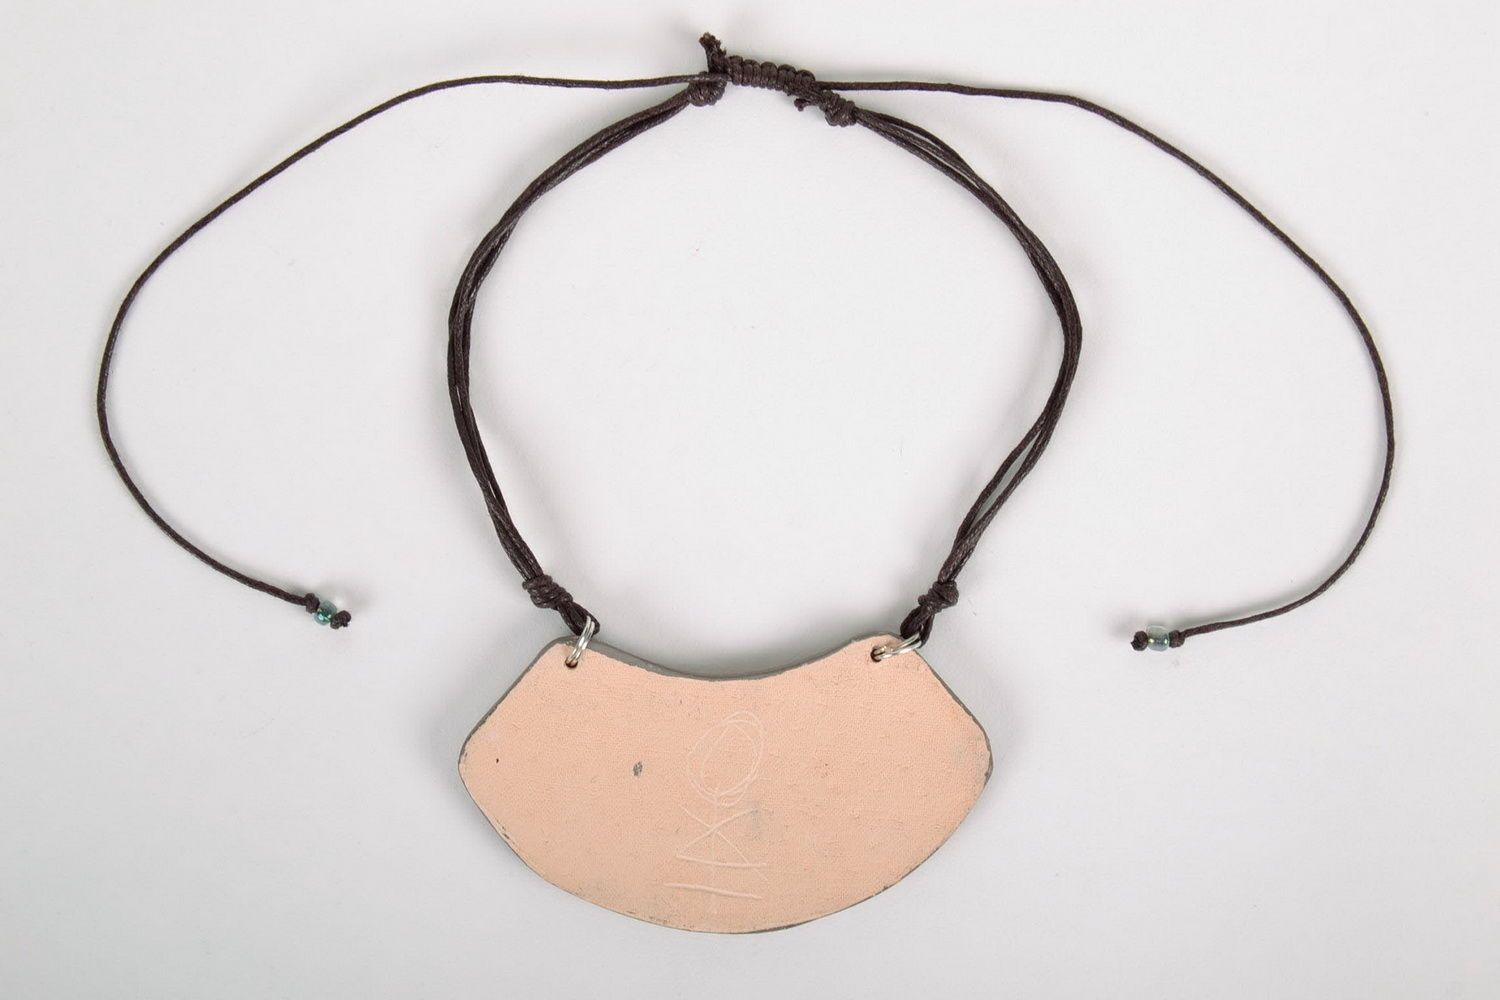 Ceramic pendant with a cord photo 2